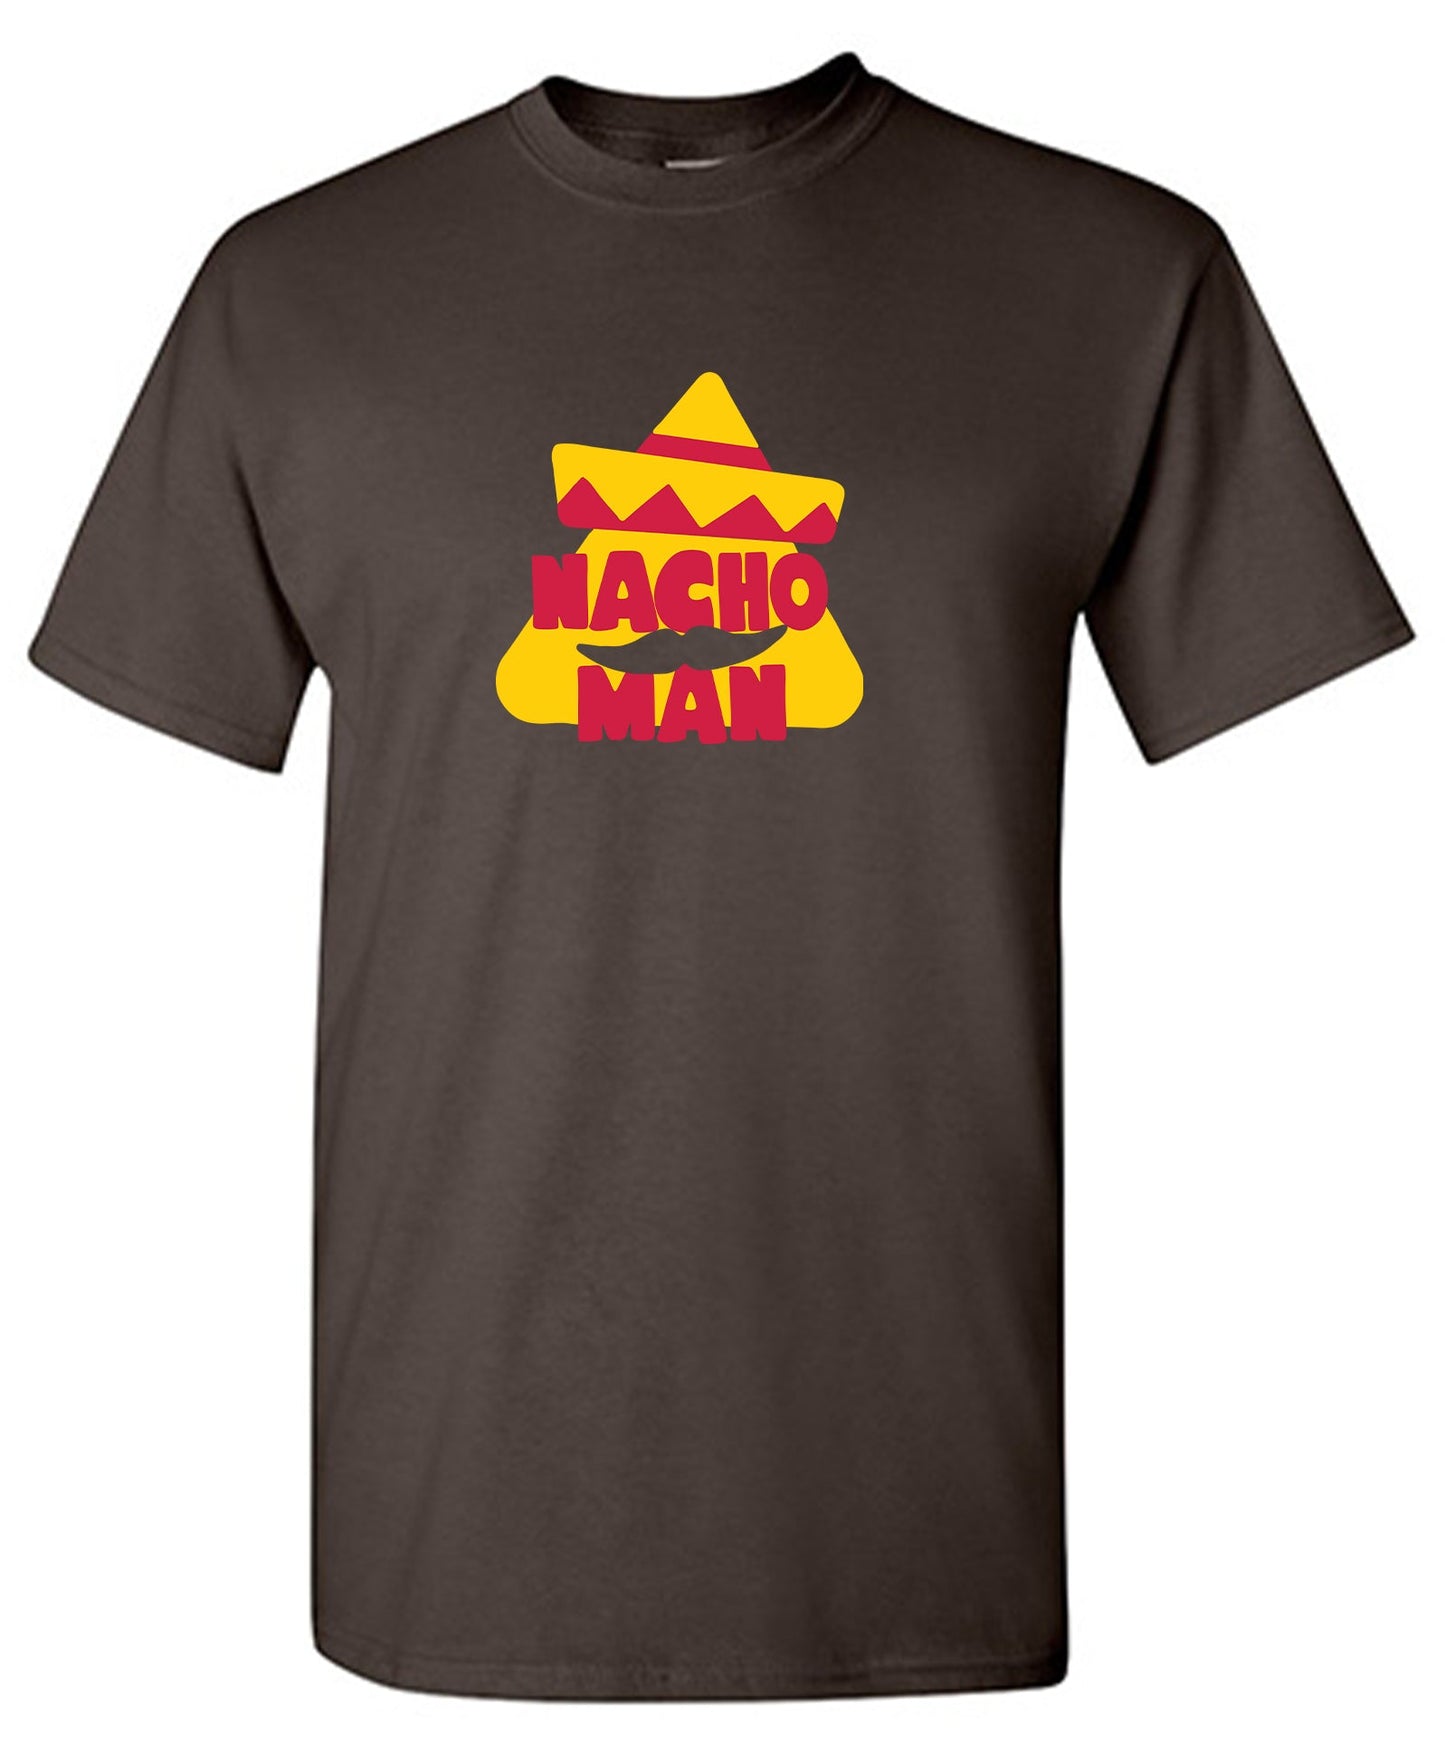 Funny T-Shirts design "Nacho Man Funny Shirts for Men"